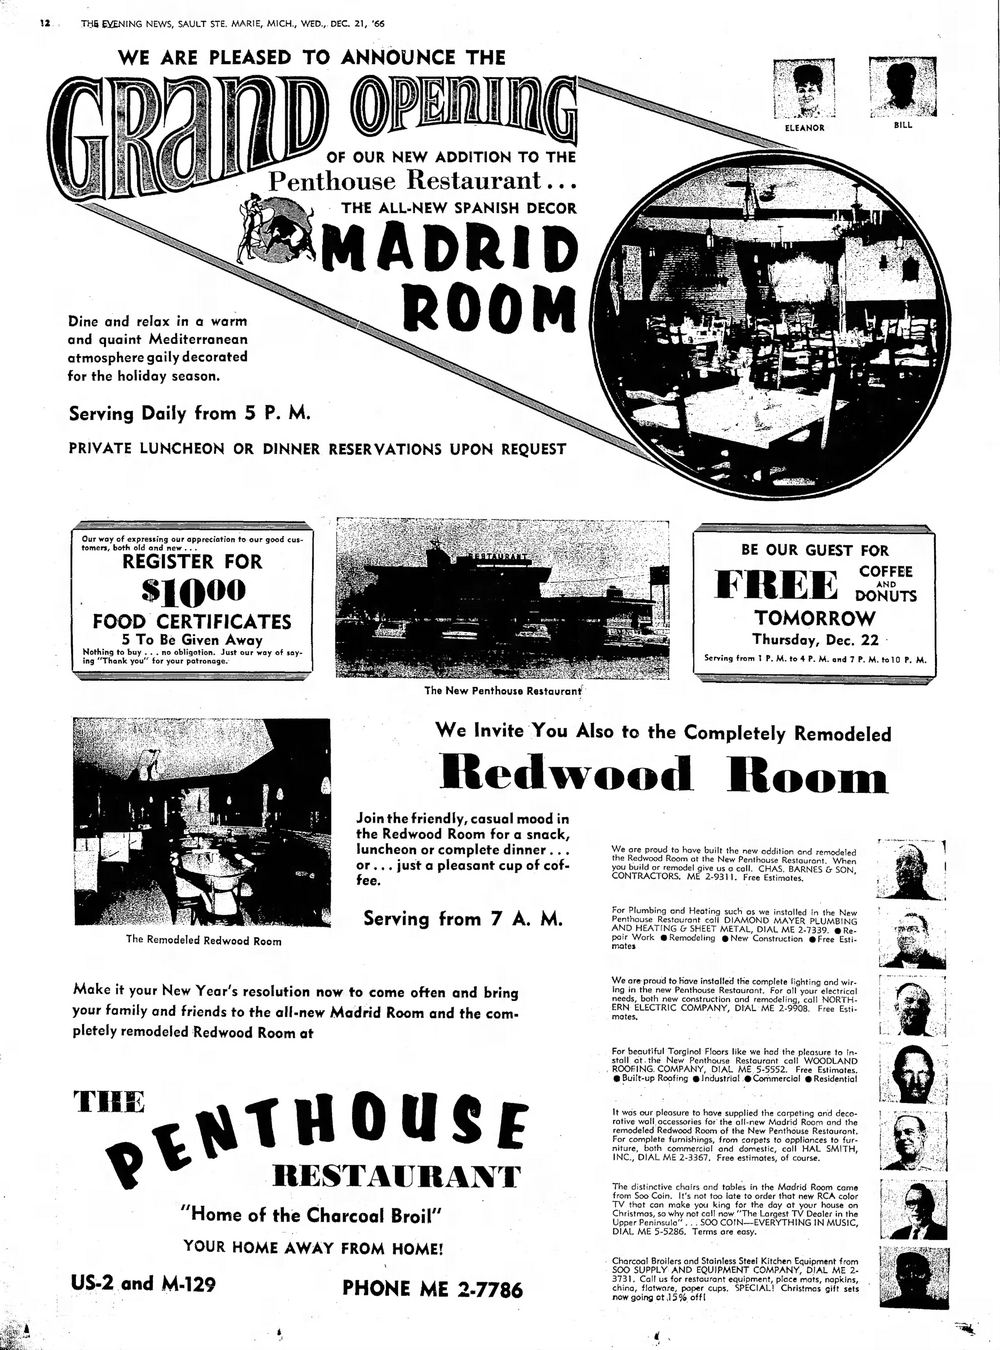 Skyline Motel (Penthouse Restaurant) - Dec 21 1966 Full Page Ad On Penthouse